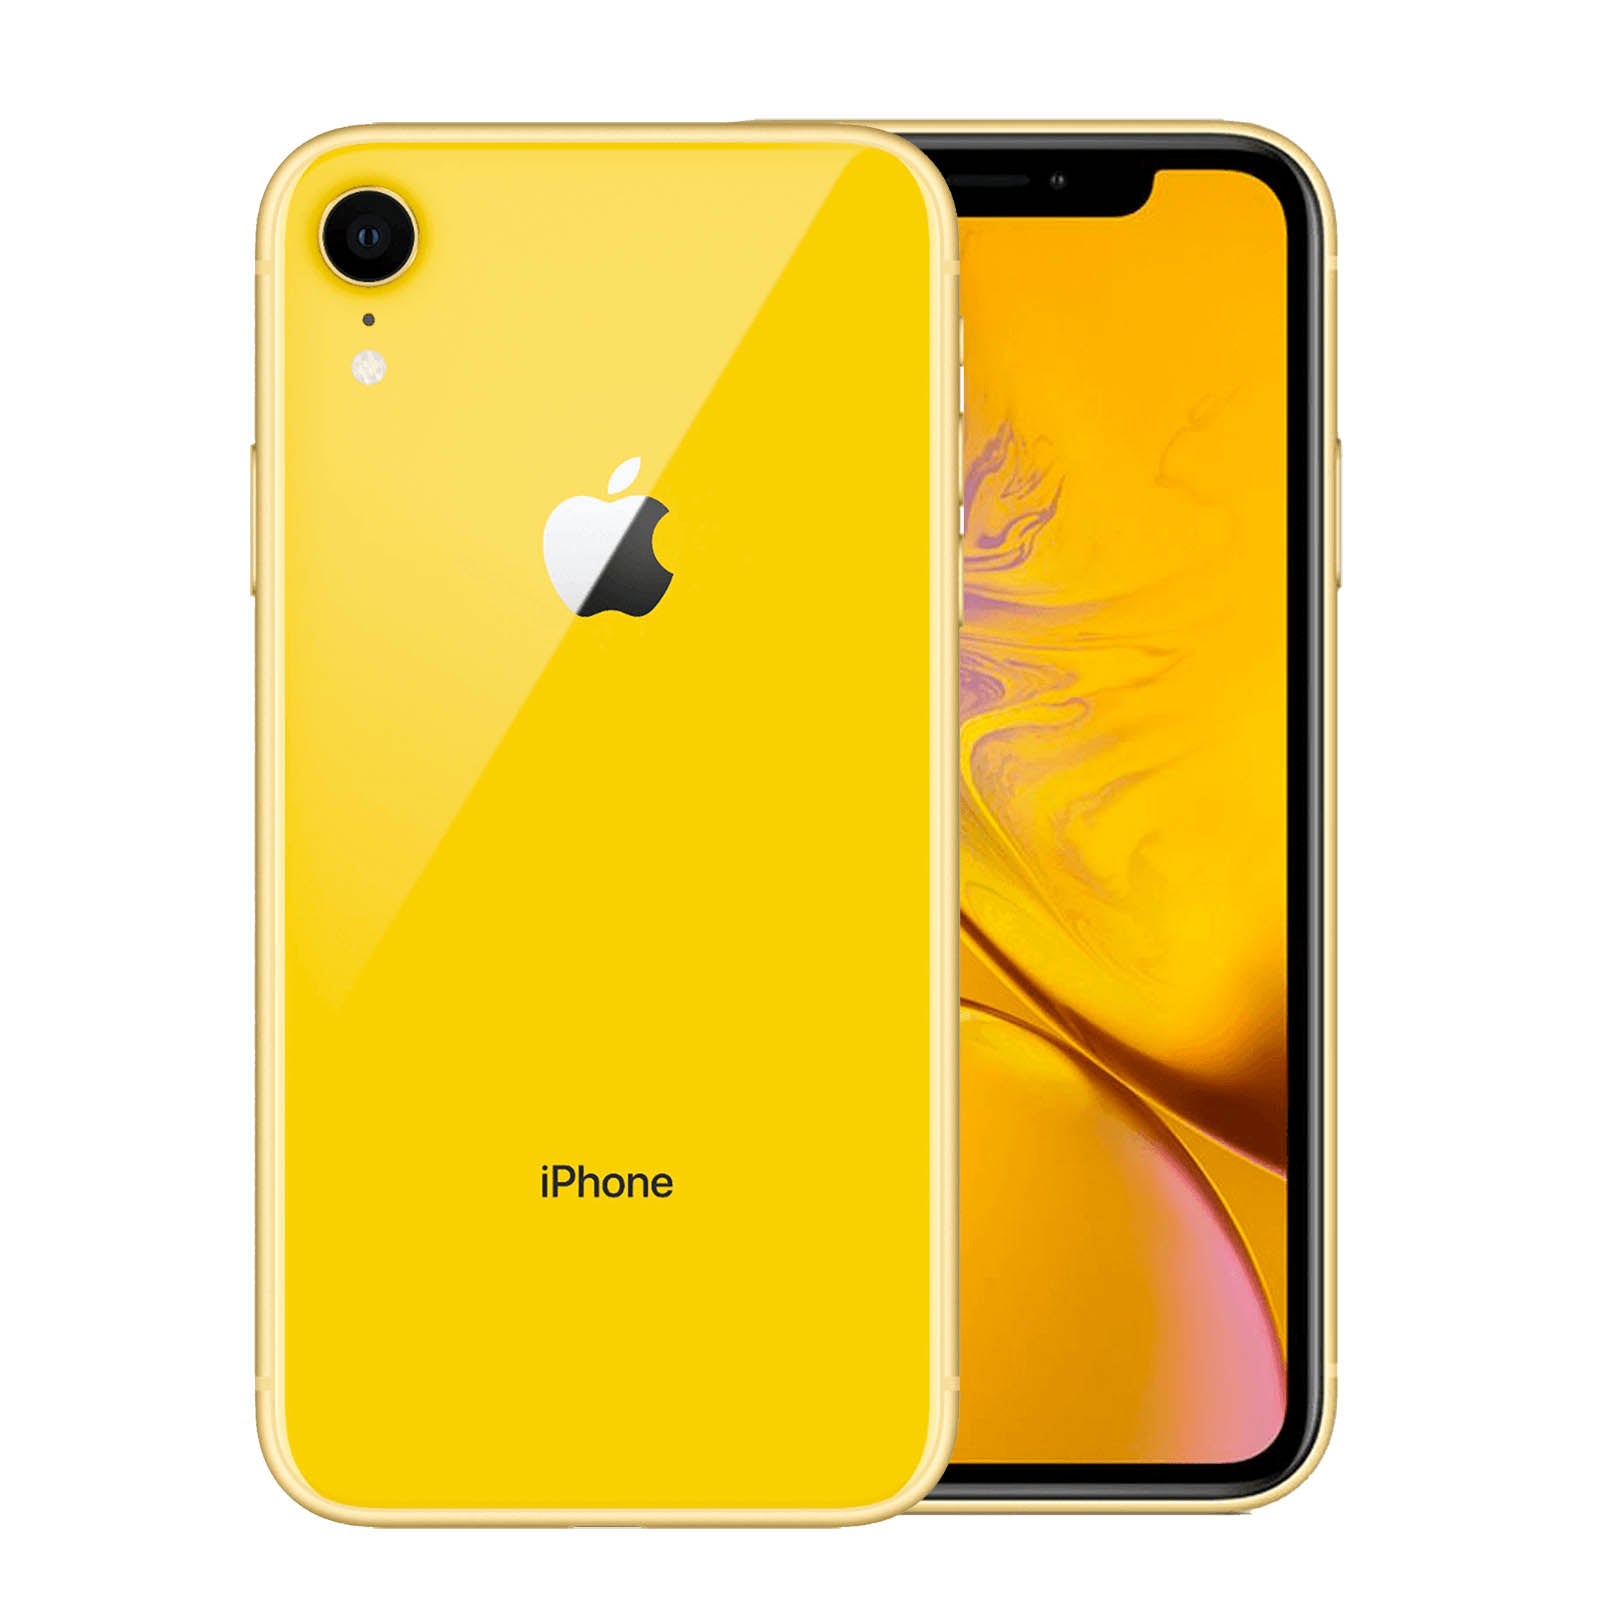 Apple iPhone XR 64GB Yellow Good - Unlocked